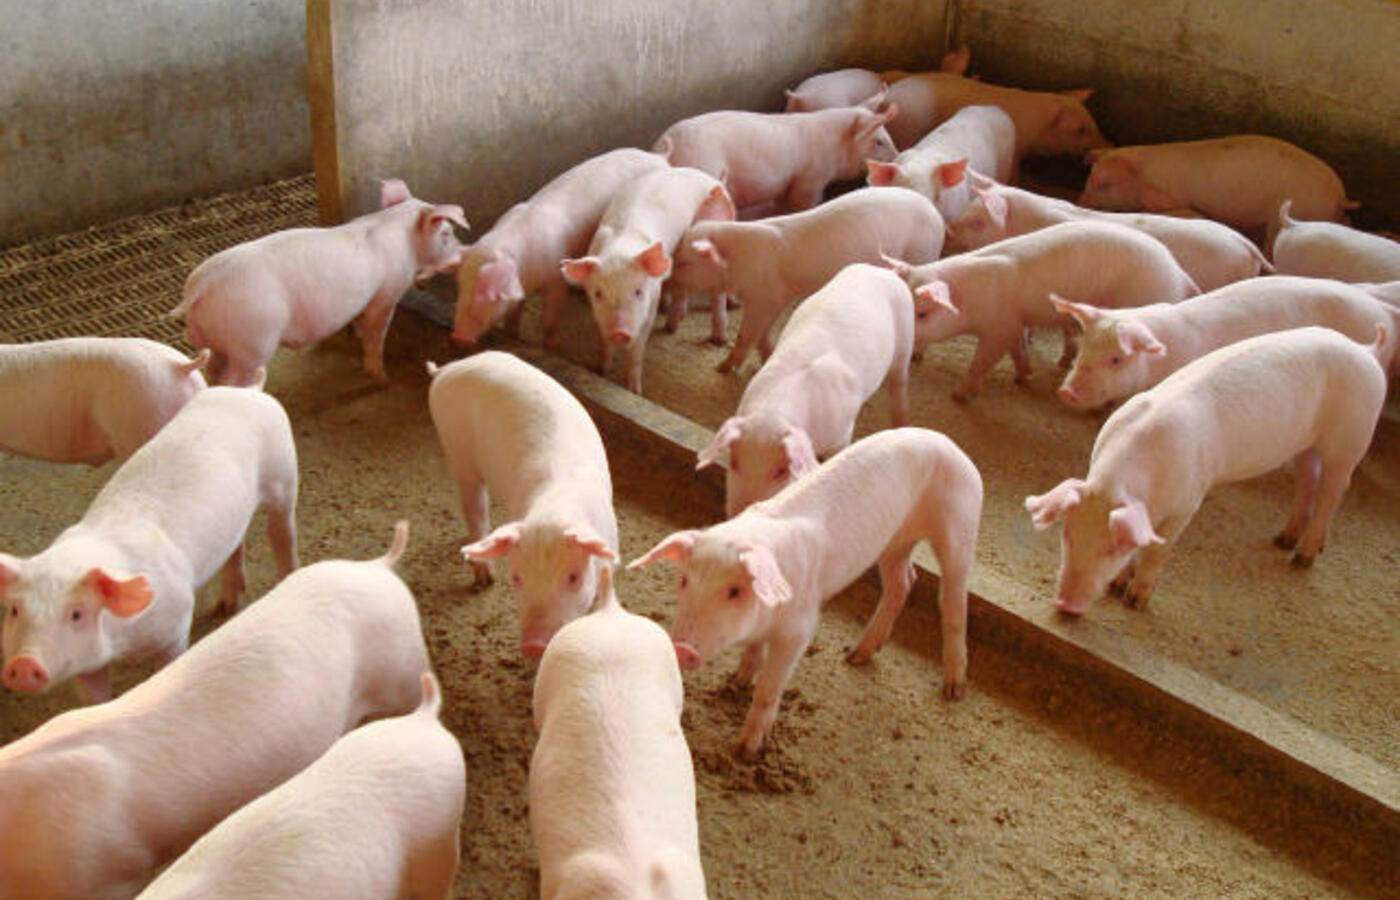 Brazilian pork exports grew 10% in February, according to ABPA